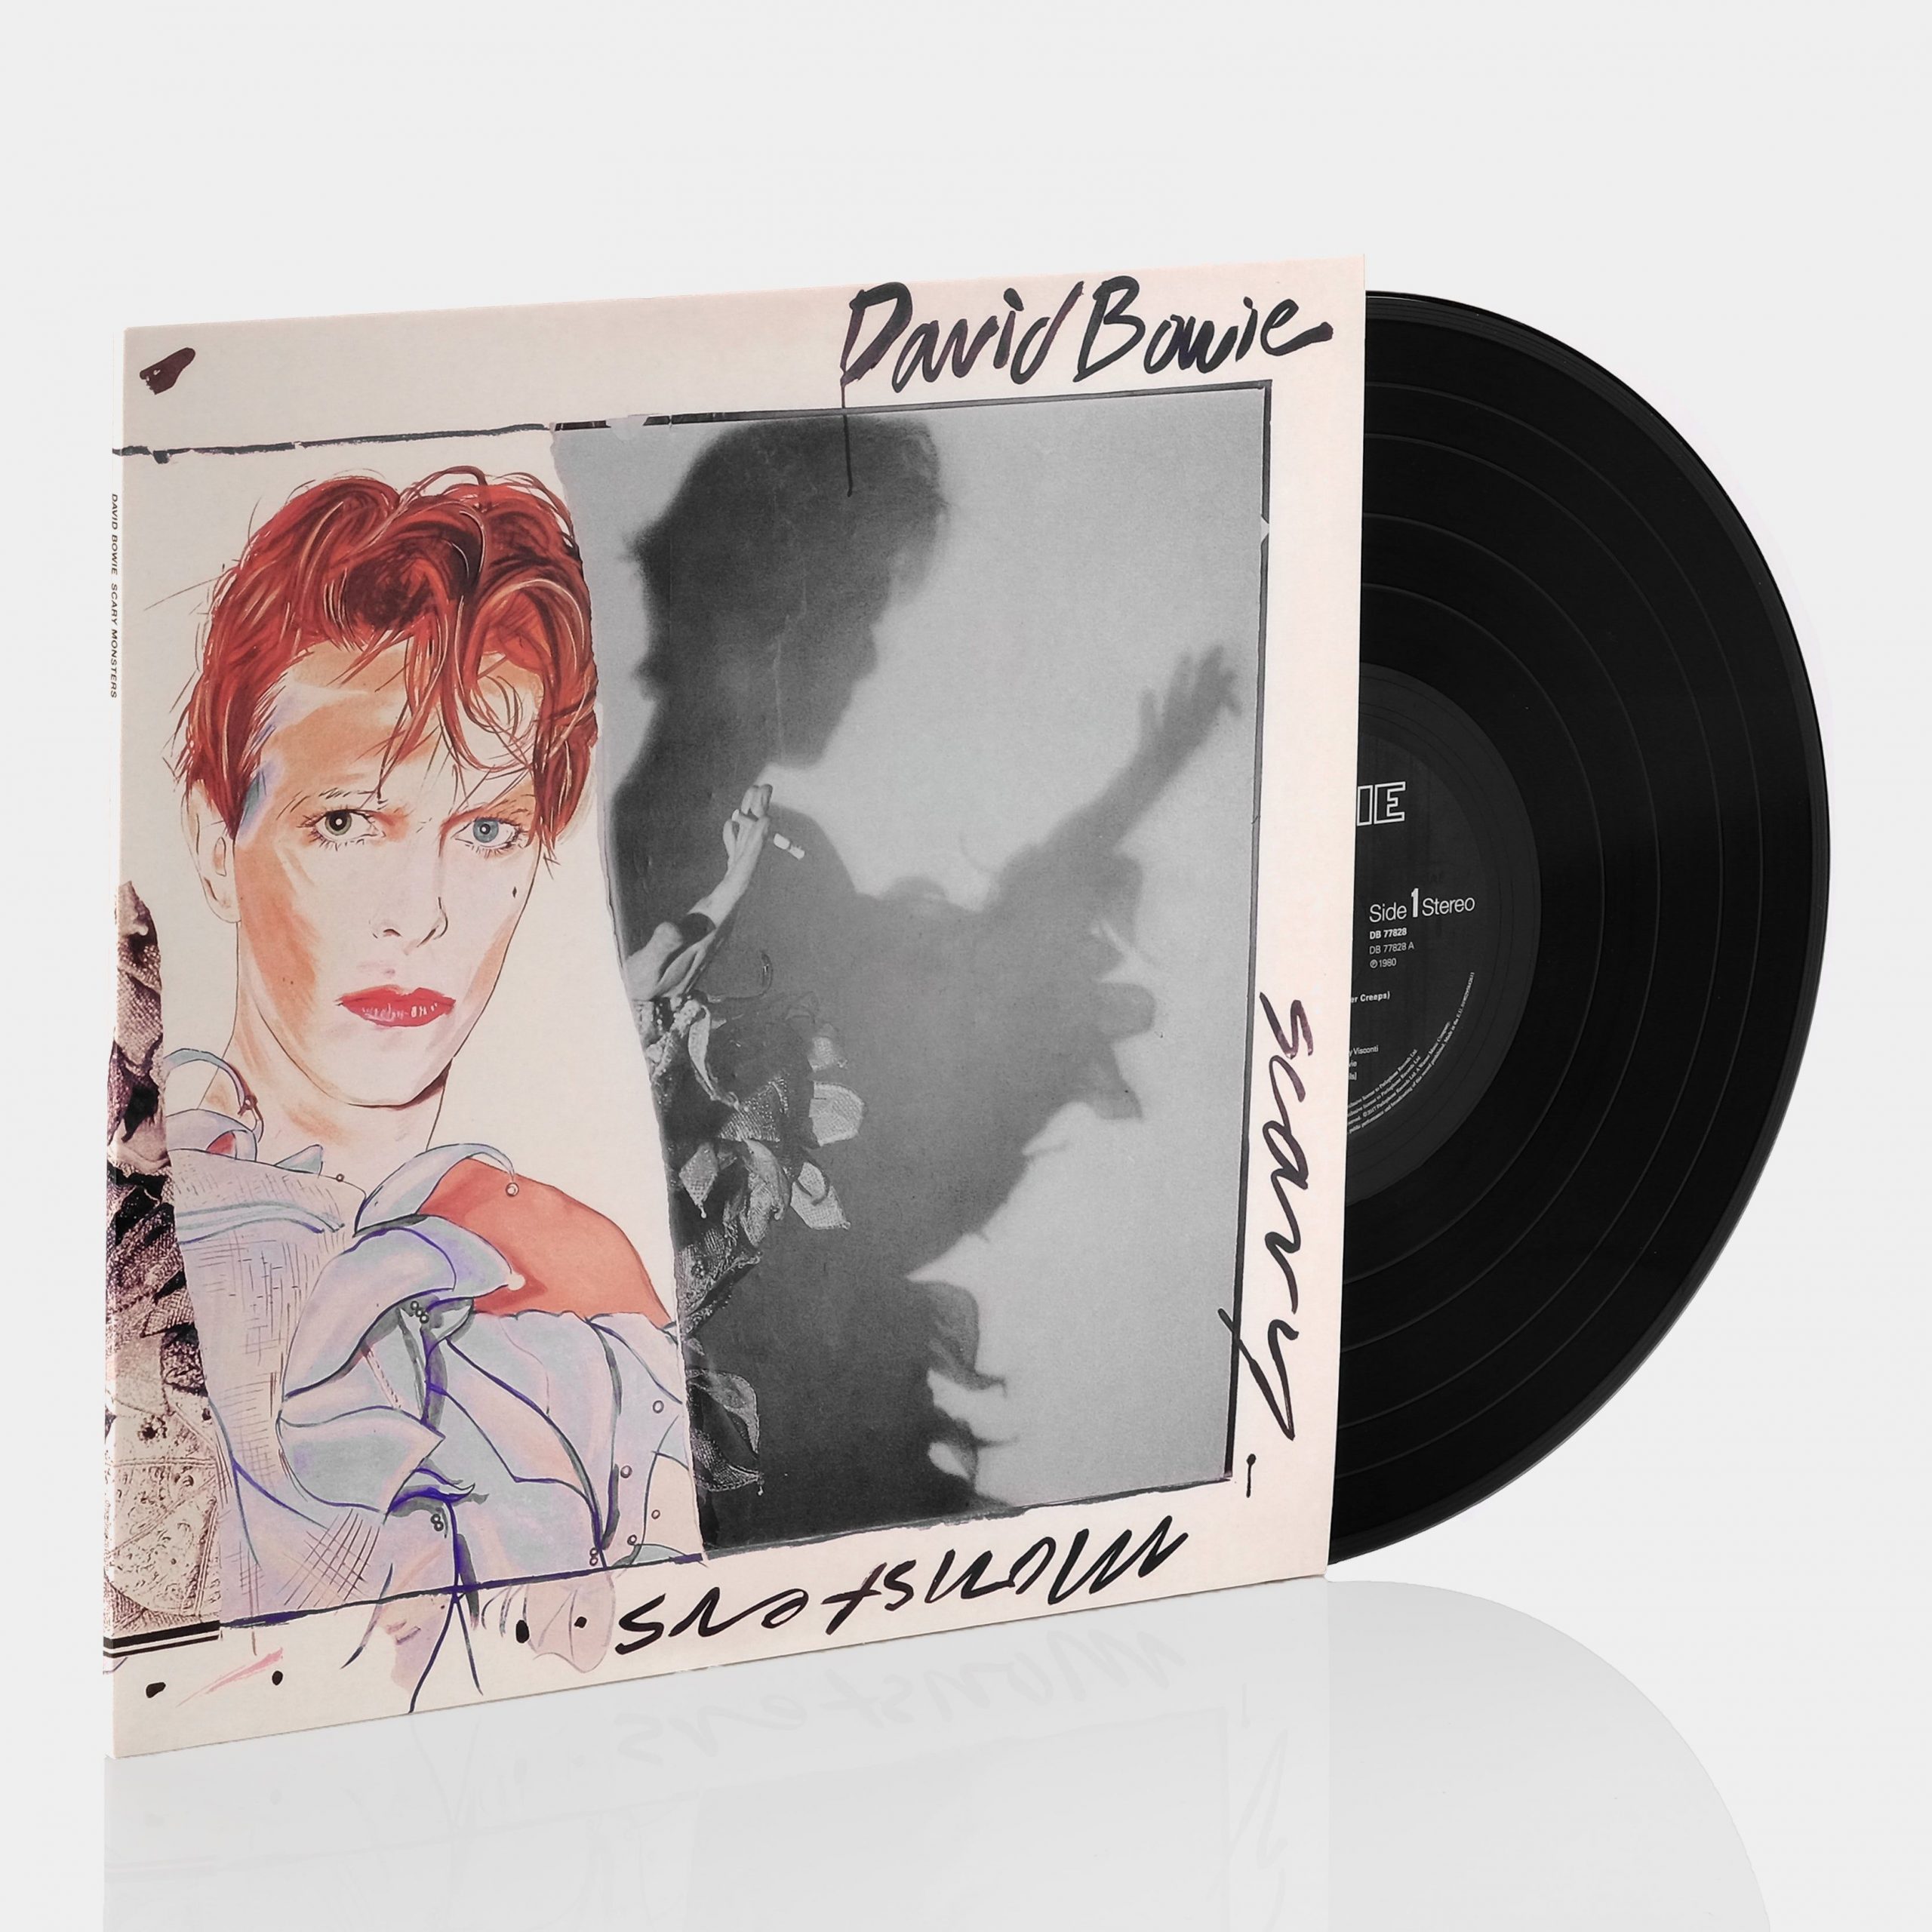 David Bowie Polaroid Film: Where to Buy Instant Film Online (2023)